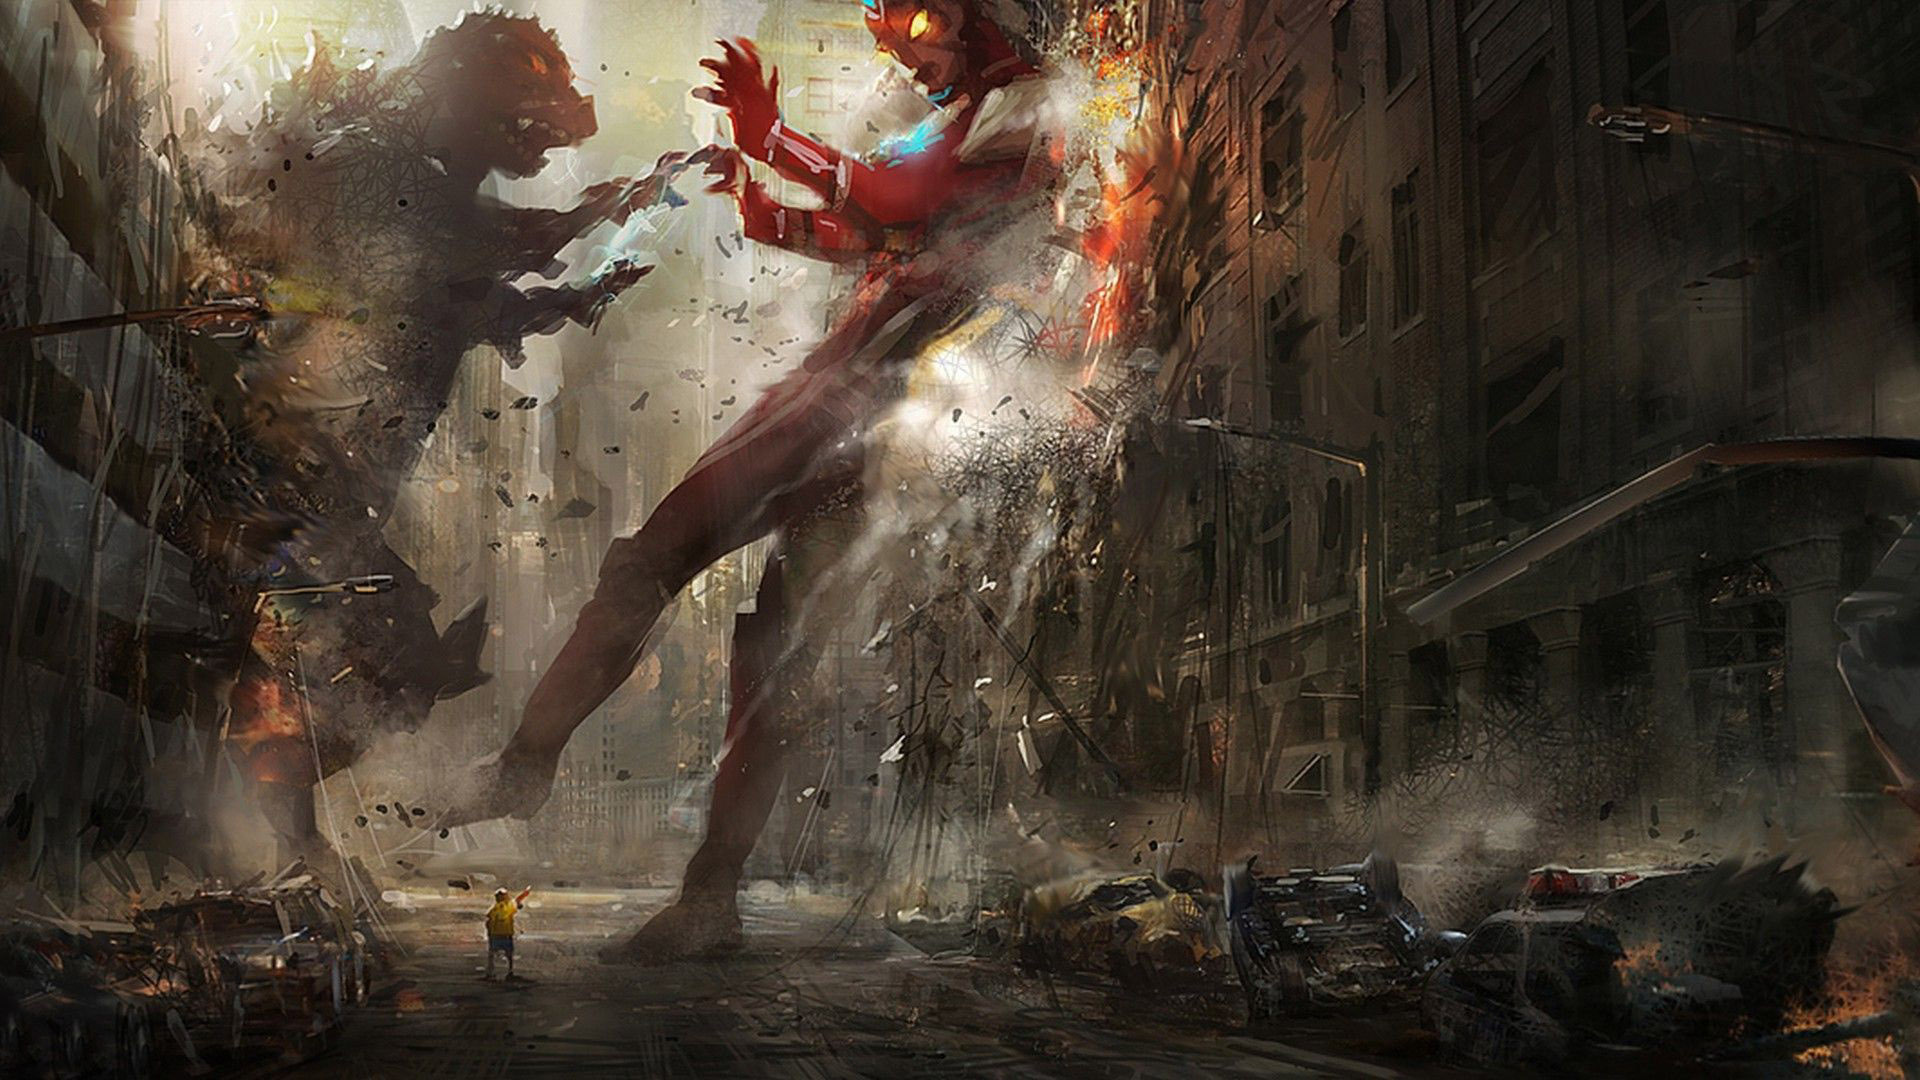 Iron Man vs Godzilla wallpaper   1070186